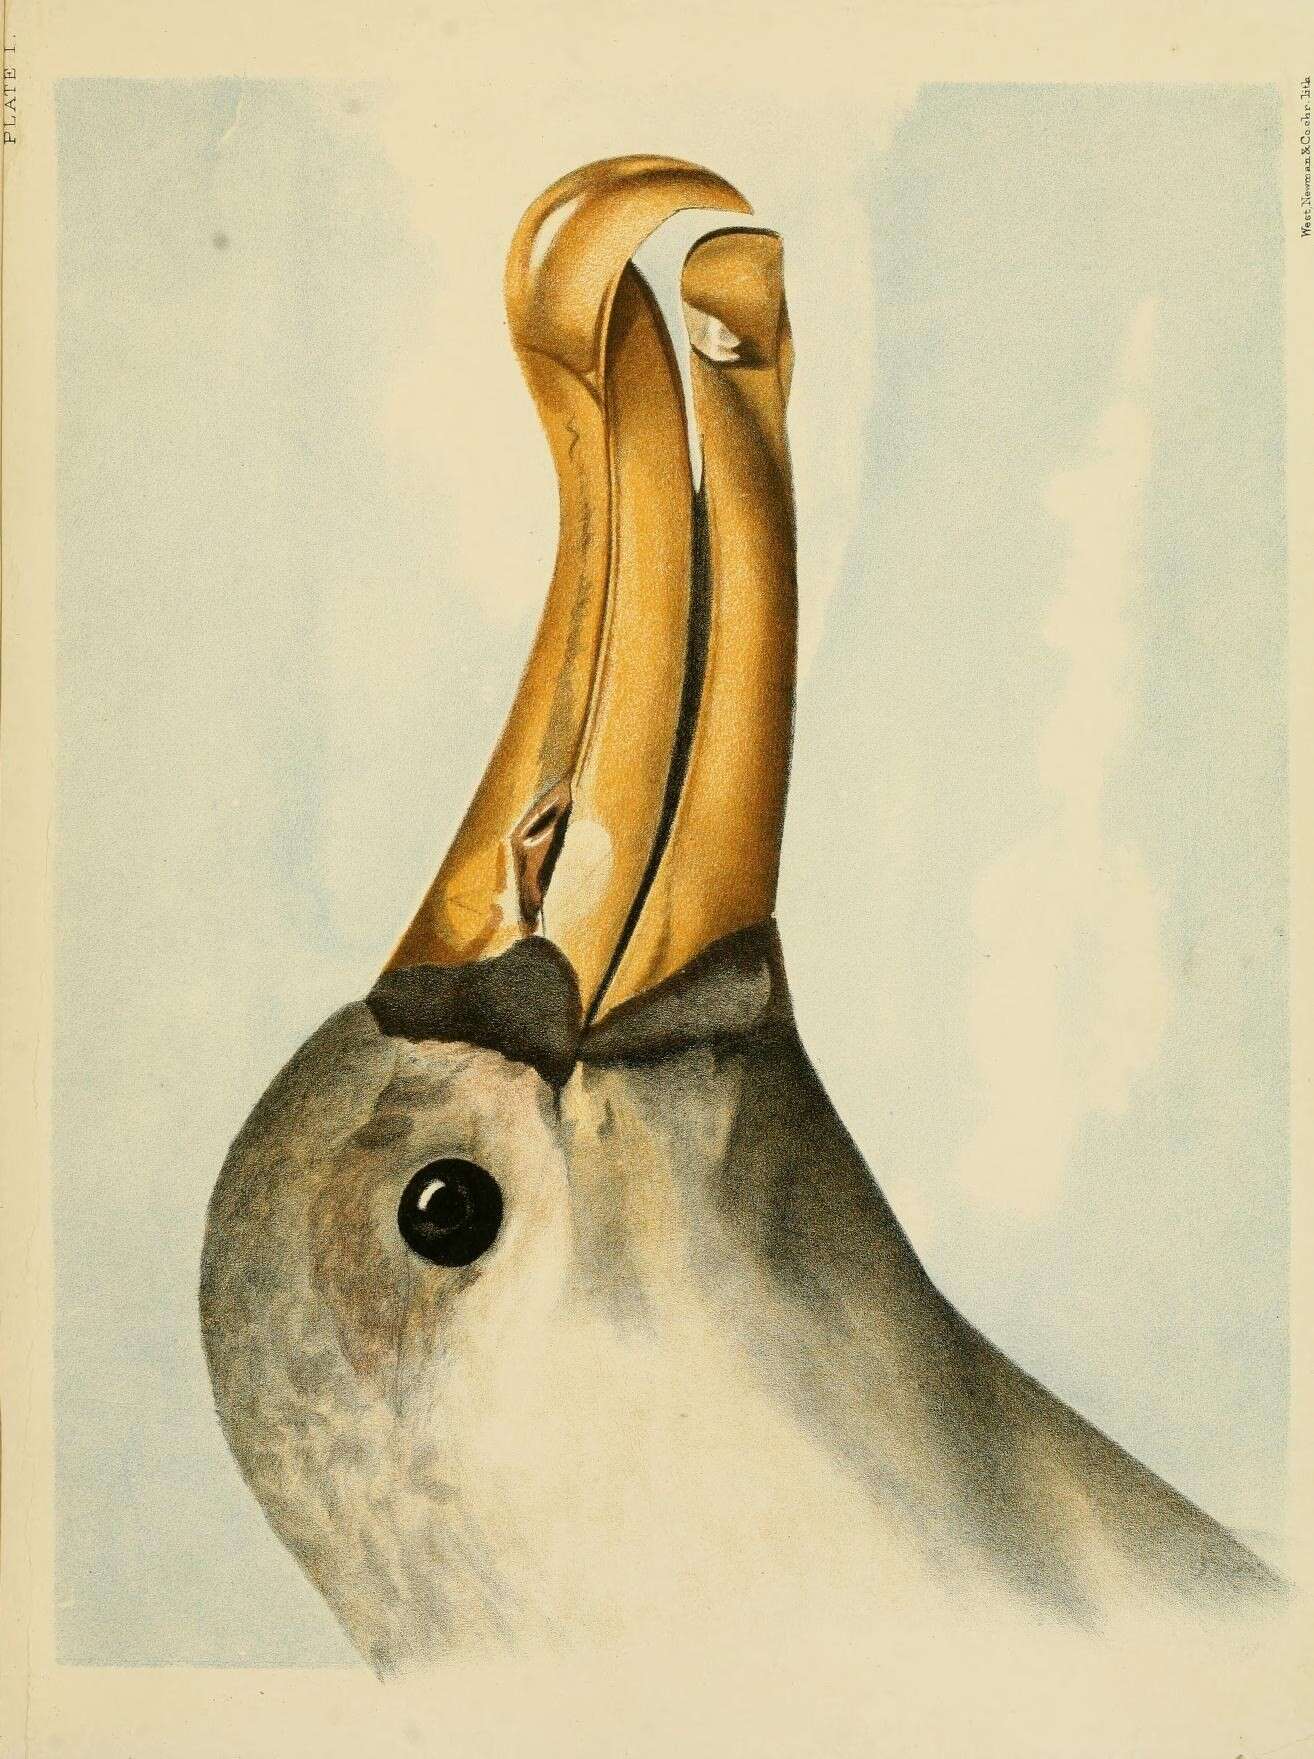 Image de Albatros hurleur